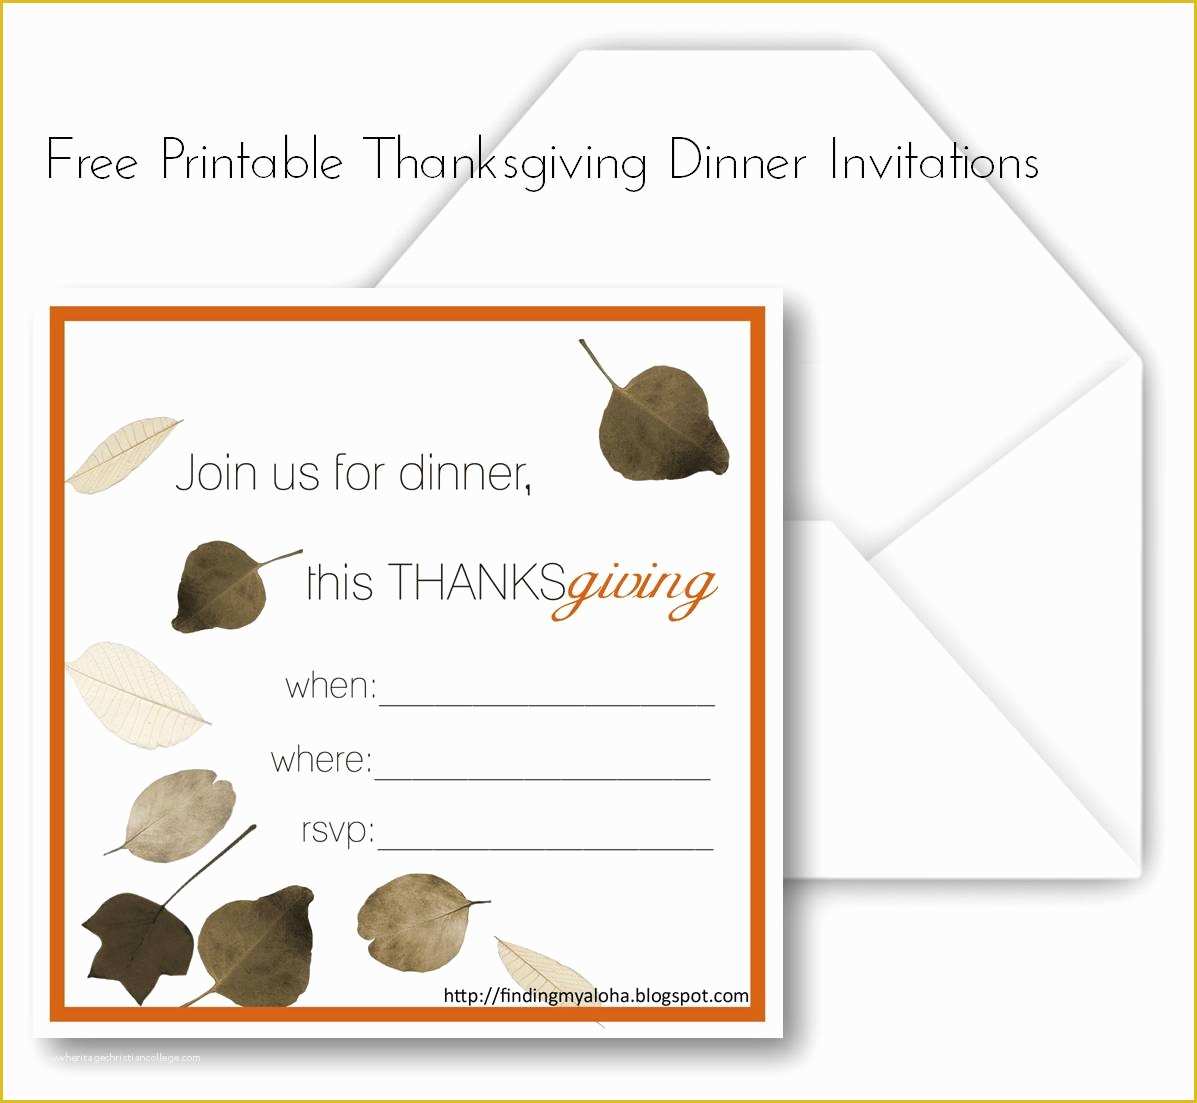 Free Dinner Invitation Template Of Free Printable Thanksgiving Dinner Invitations